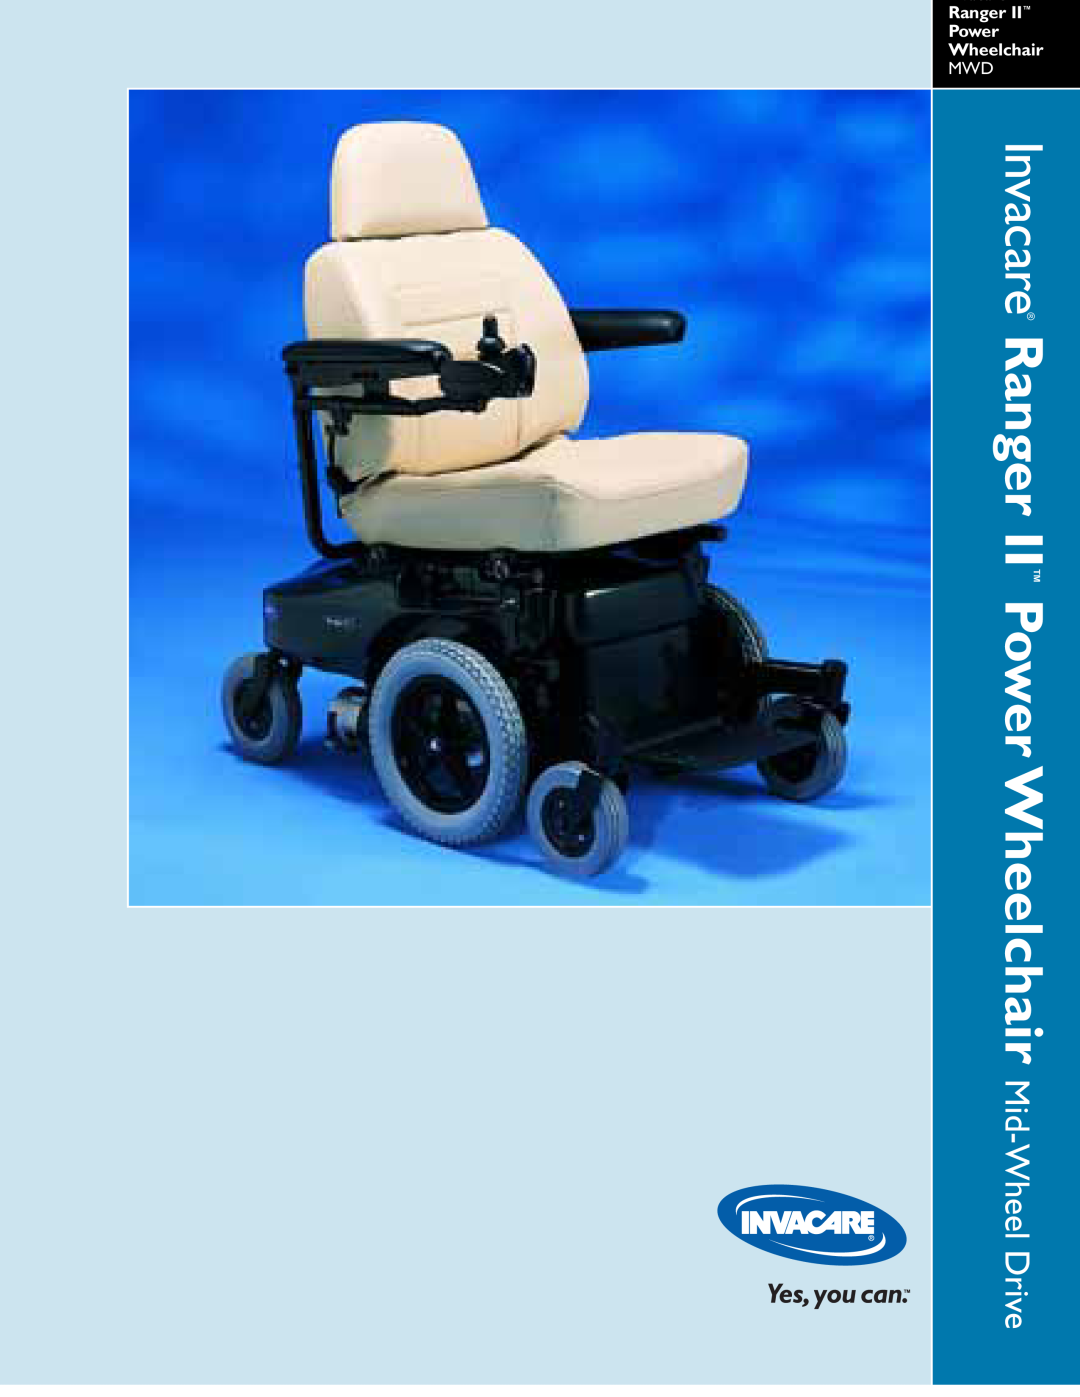 Invacare 22NF specifications Invacare Ranger II Power Wheelchair, Mid-Wheel Drive, Ranger Power Wheelchair 